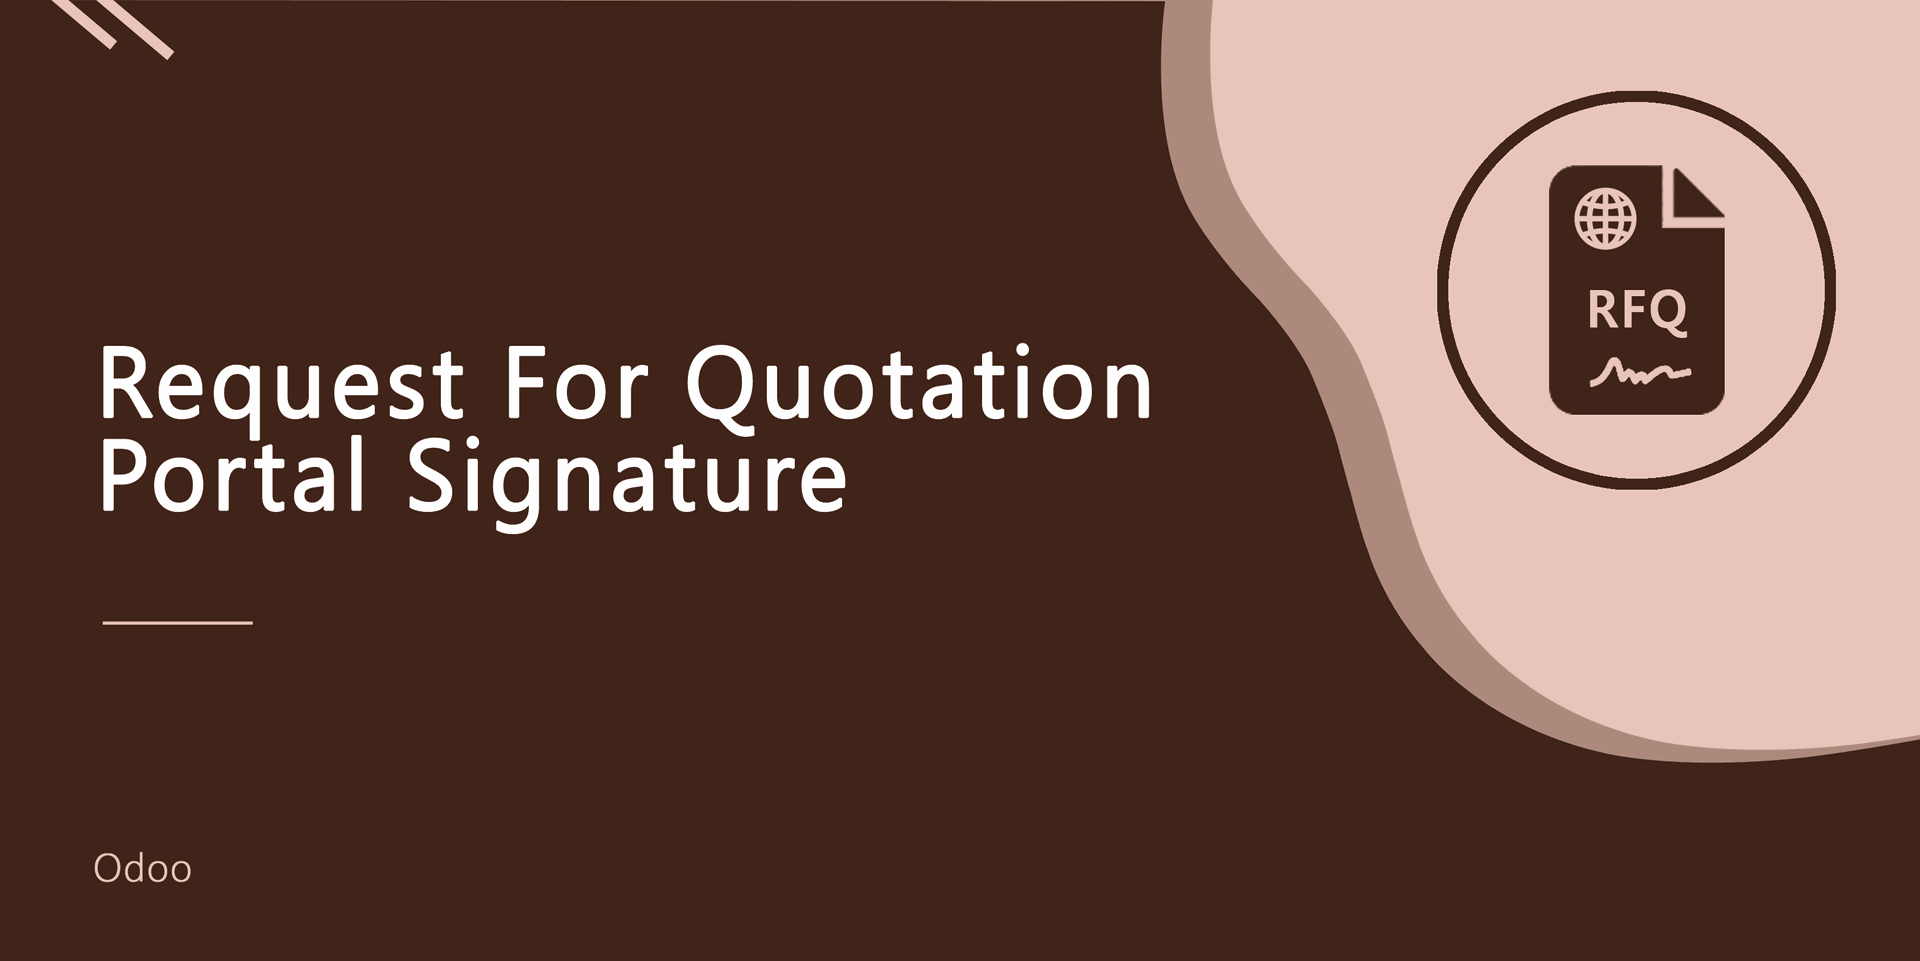 Request For Quotation Portal Signature
